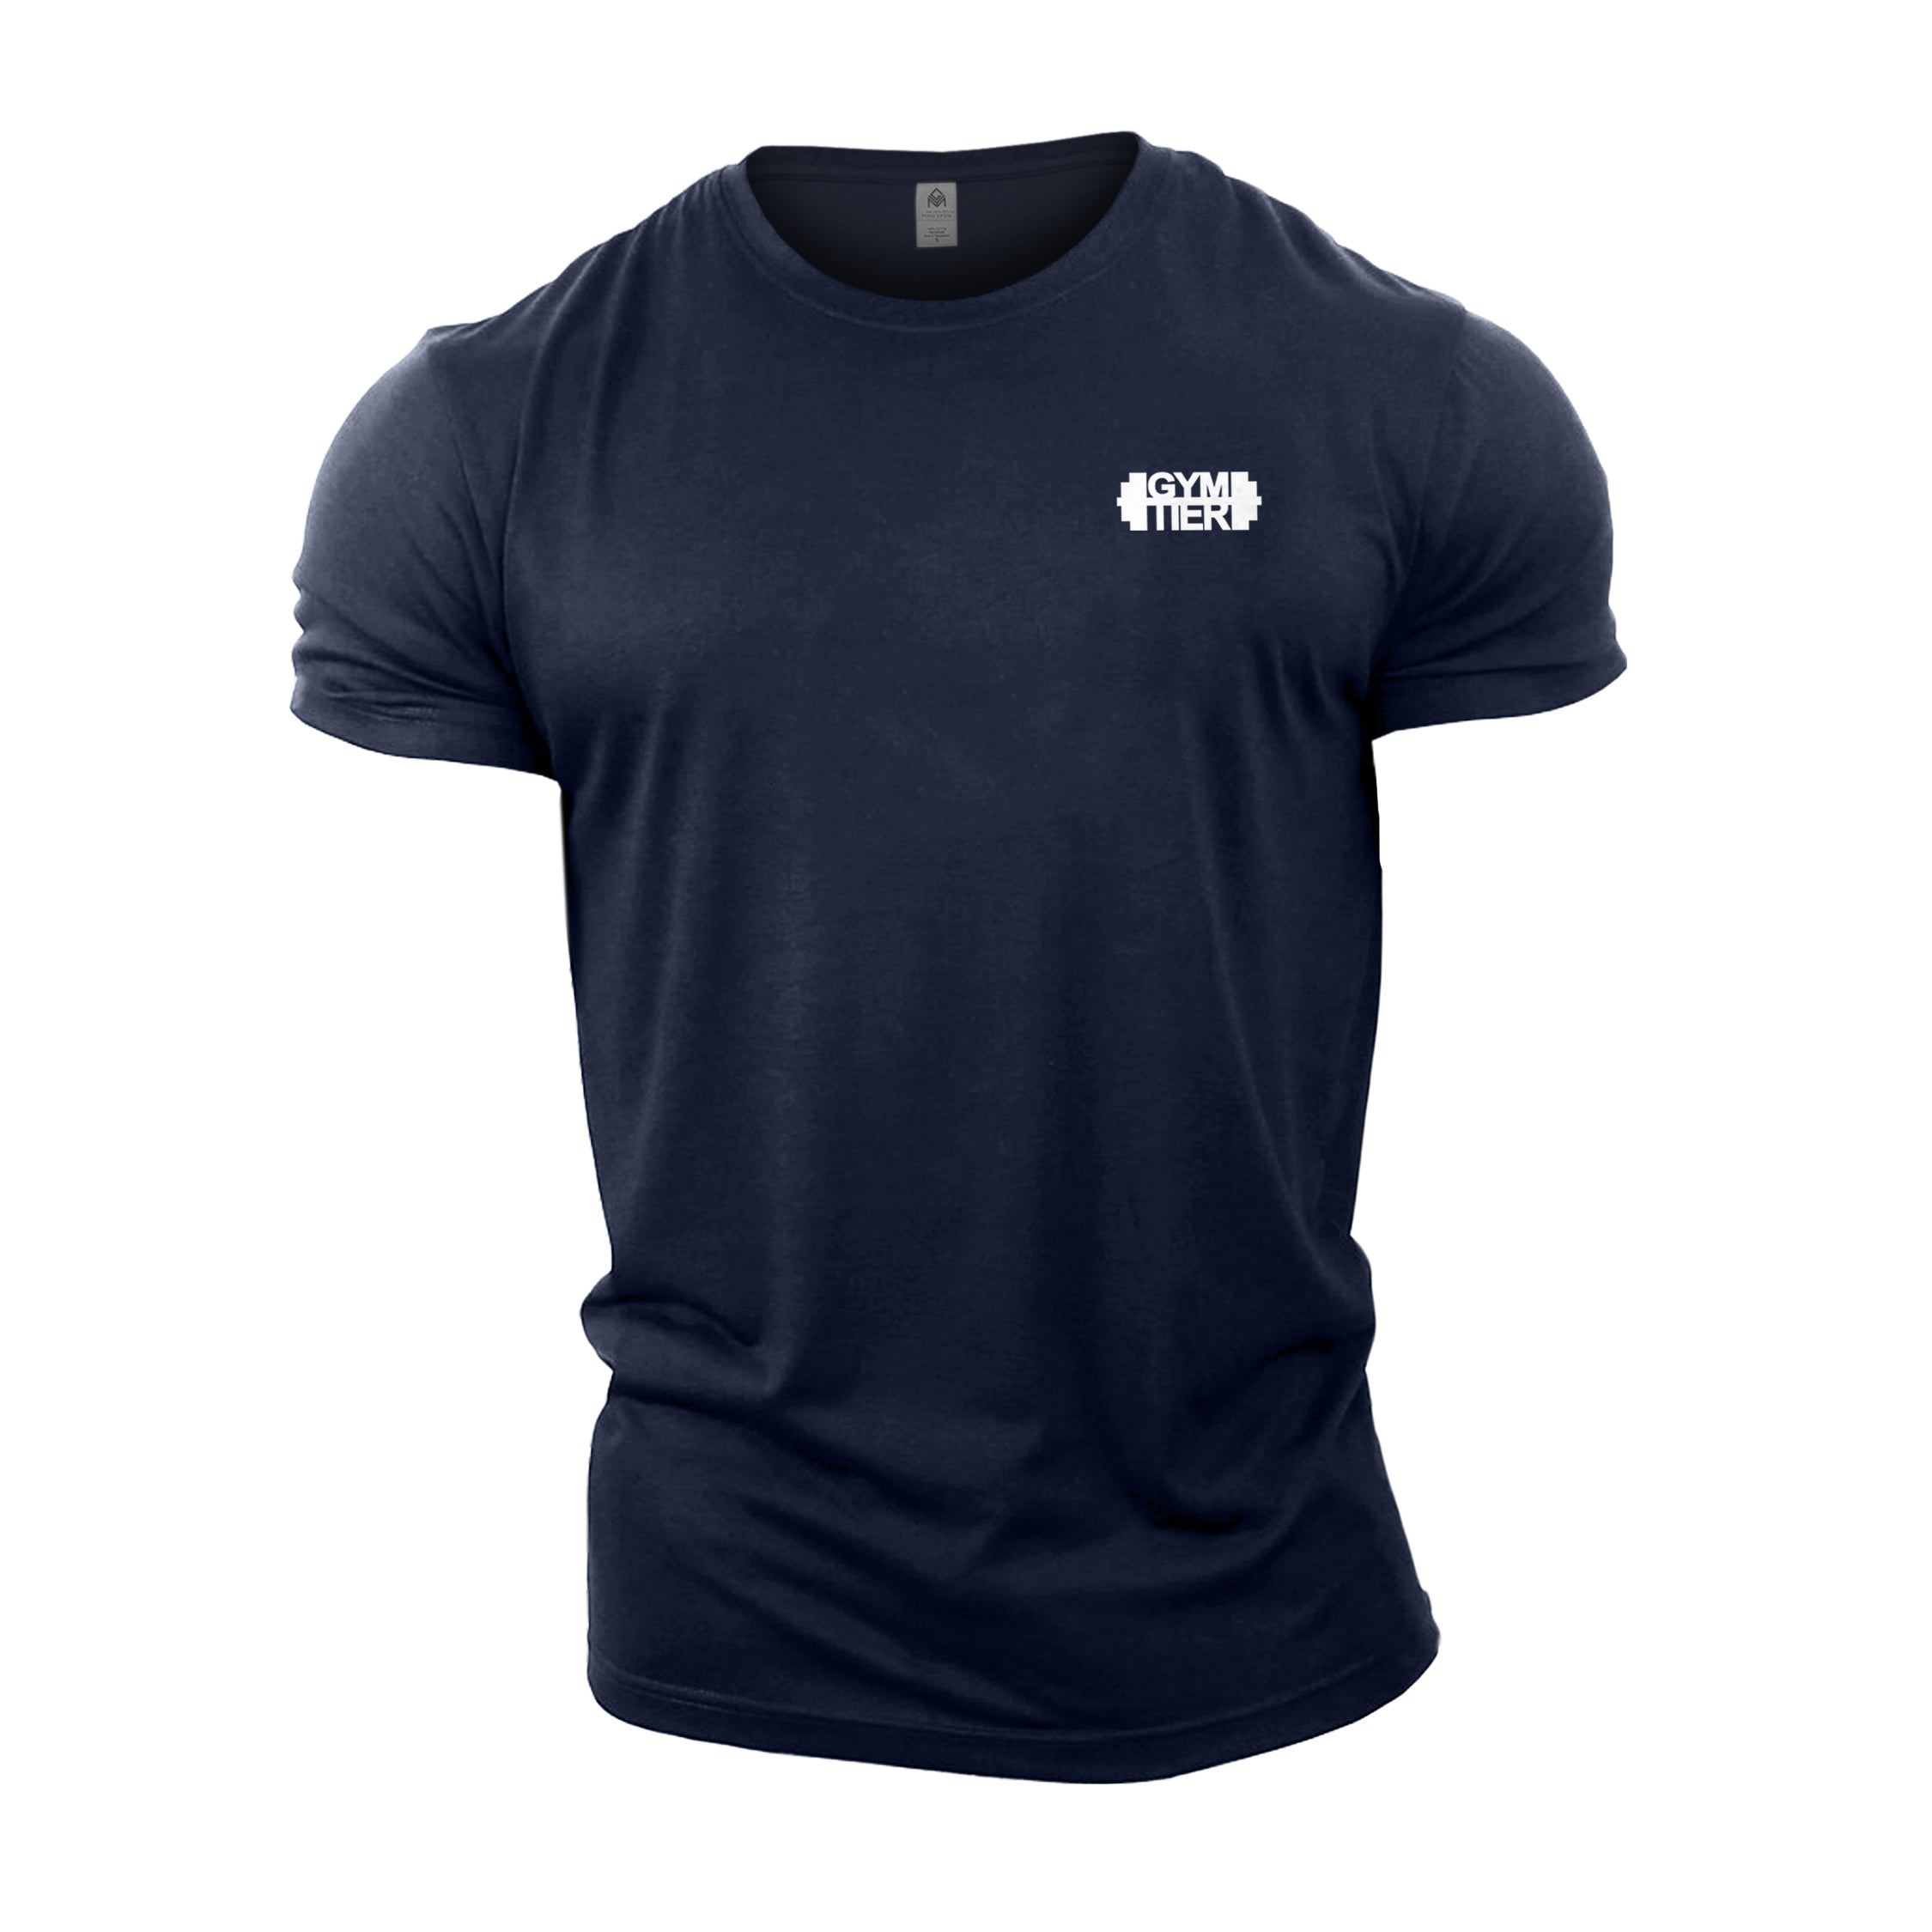 GYMTIER Classic - Gym T-Shirt